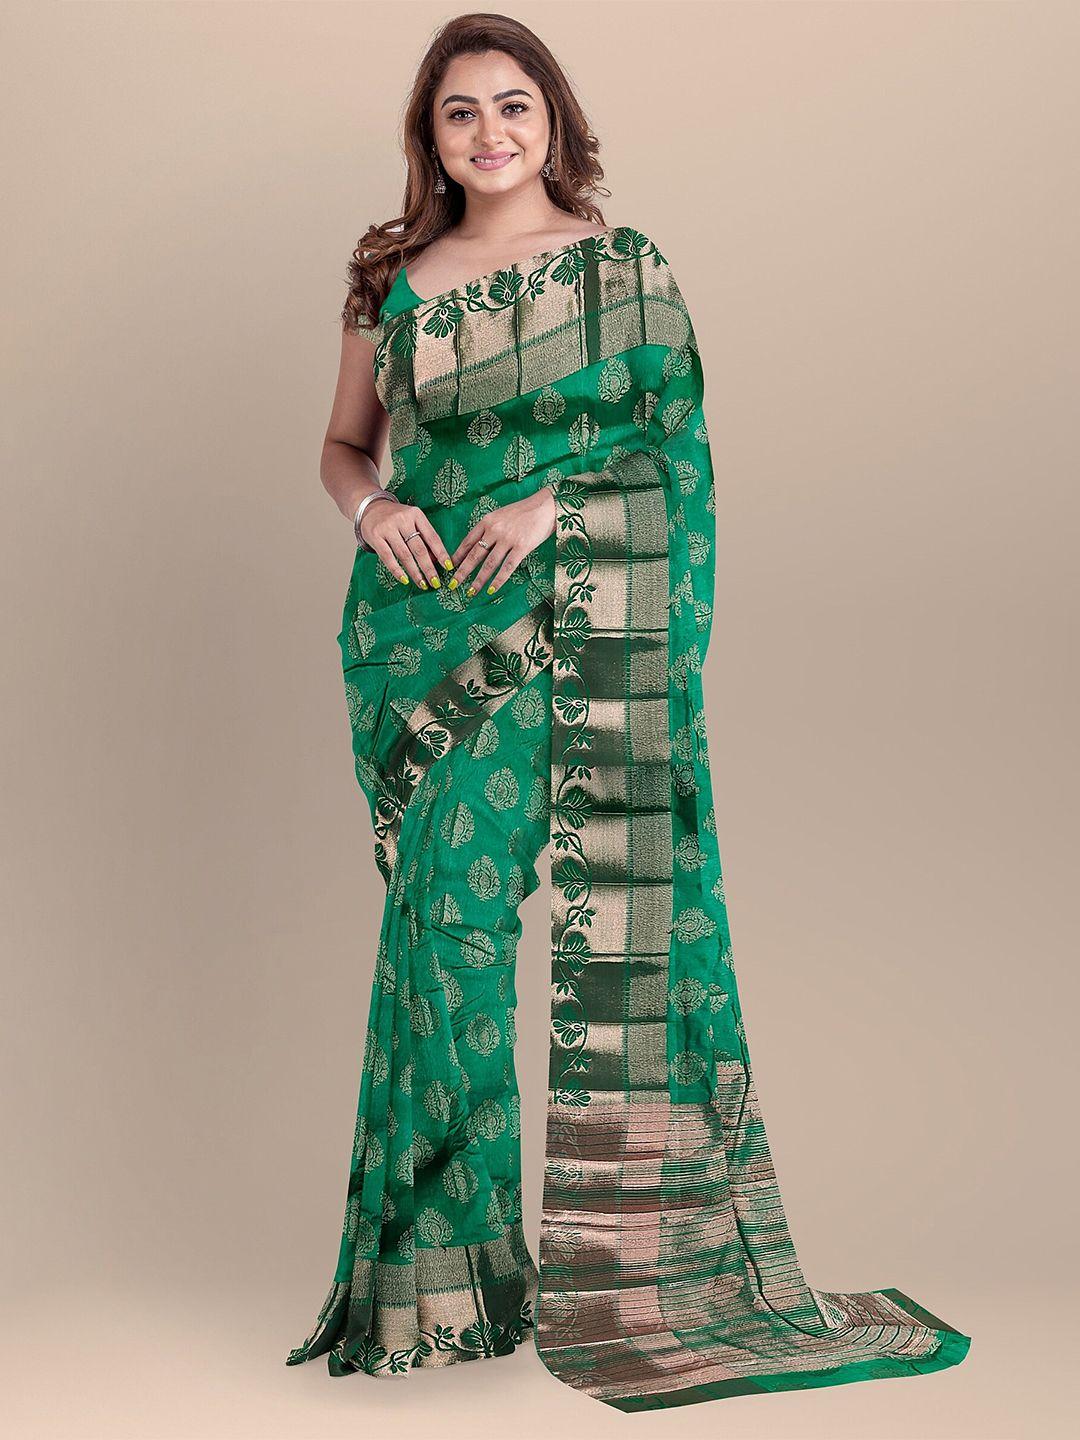 the chennai silks green & gold-toned woven design zari jute cotton fusion saree